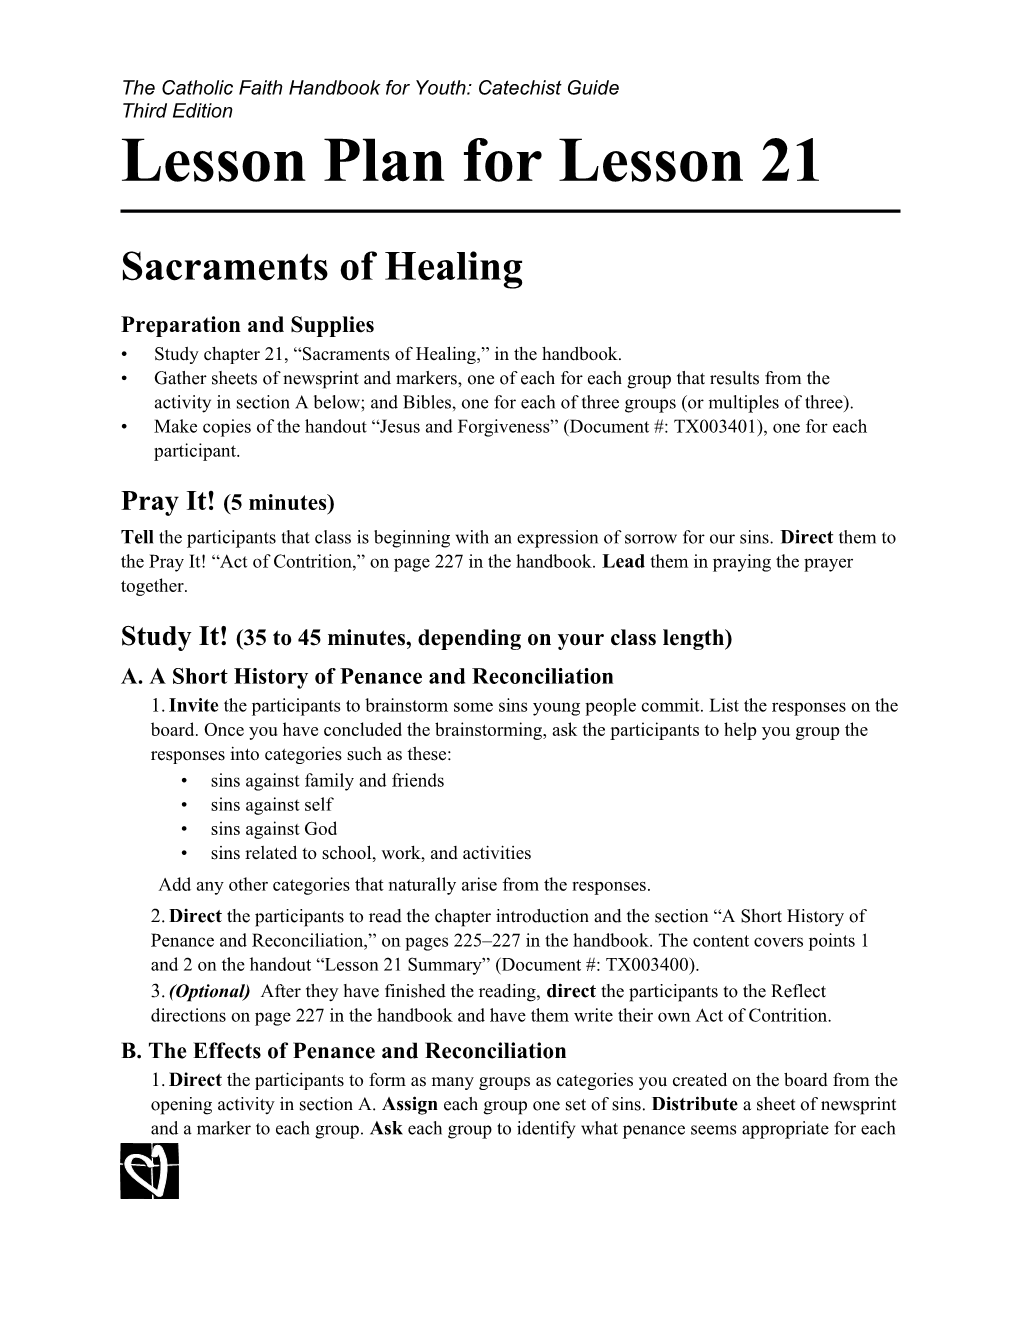 Lesson Plan for Lesson 21